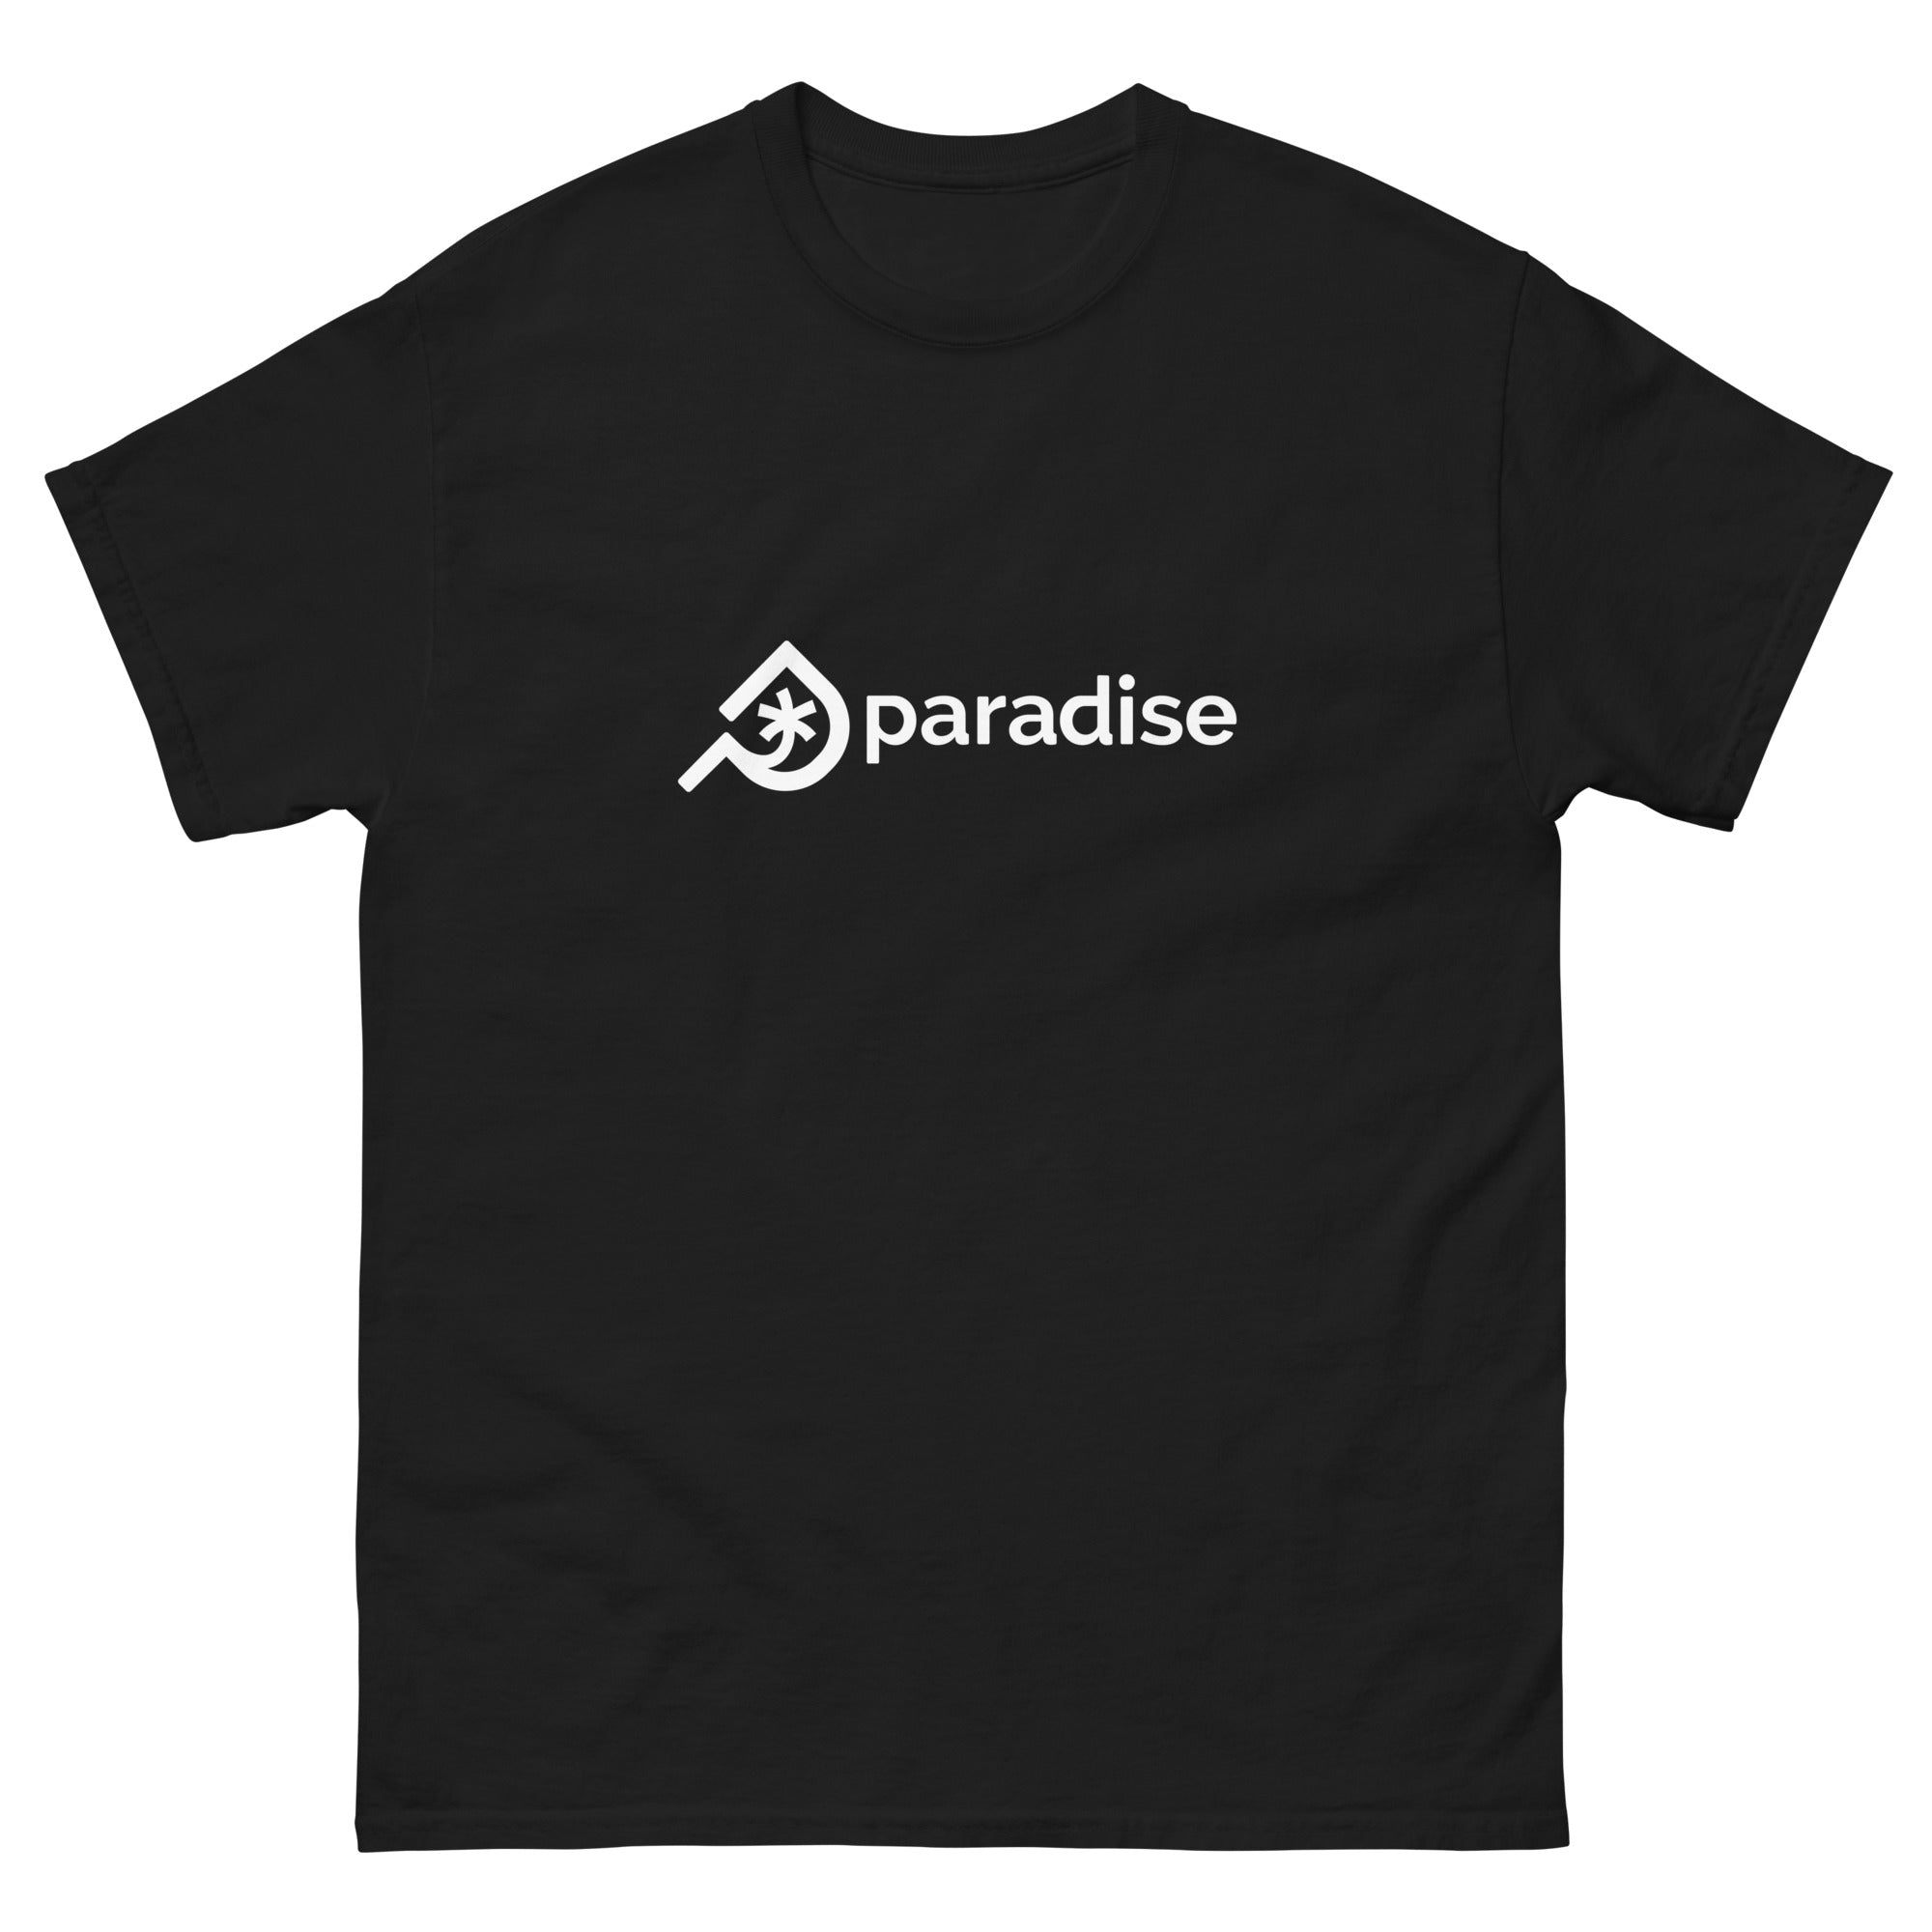 Paradise Skis logo shirt in black